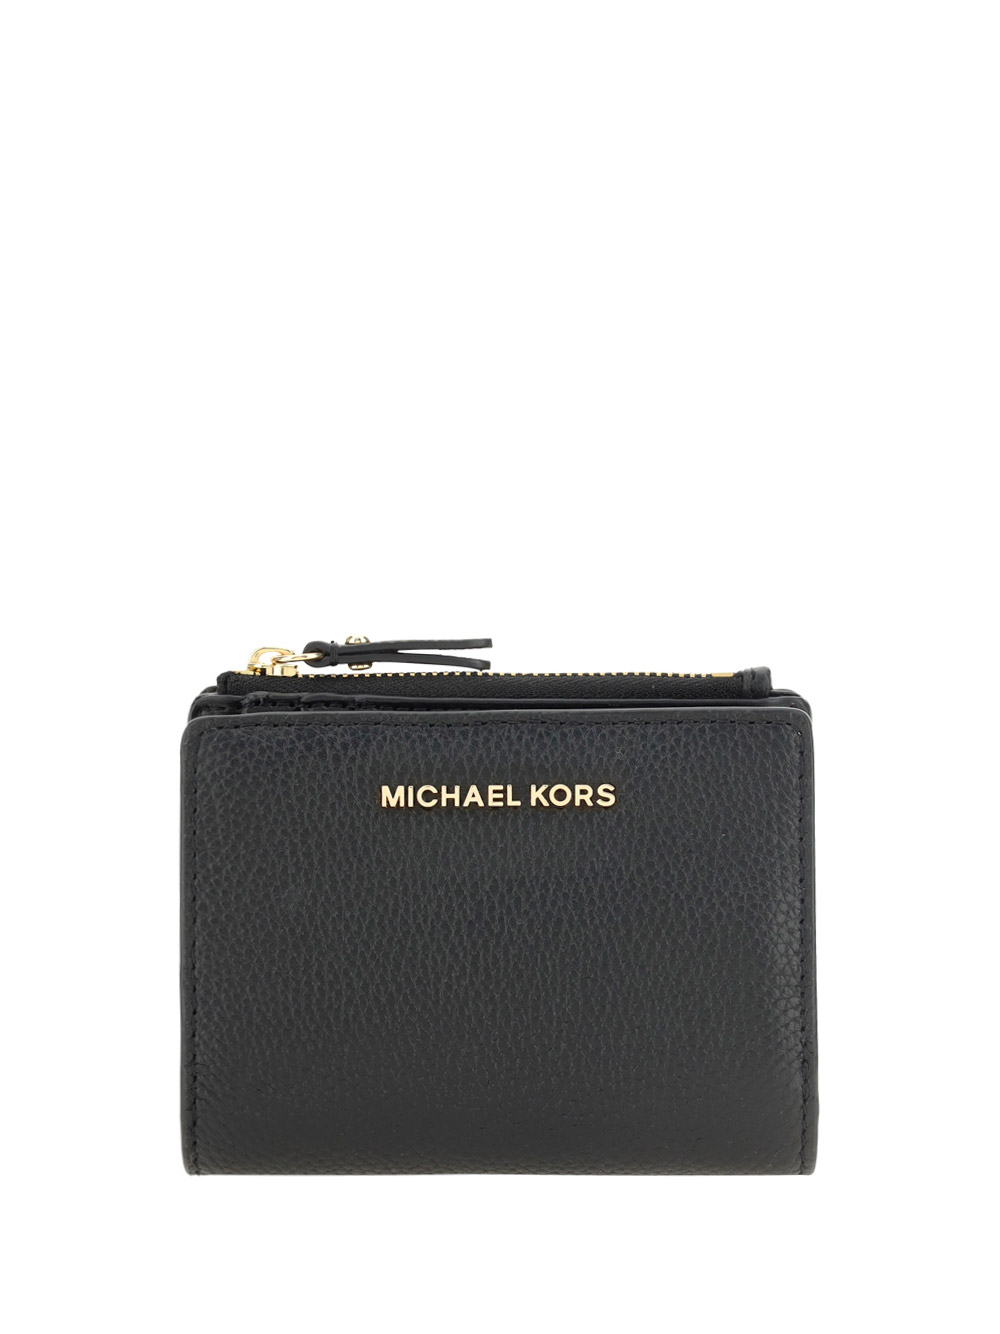 MICHAEL KORS Wallets for Women | ModeSens